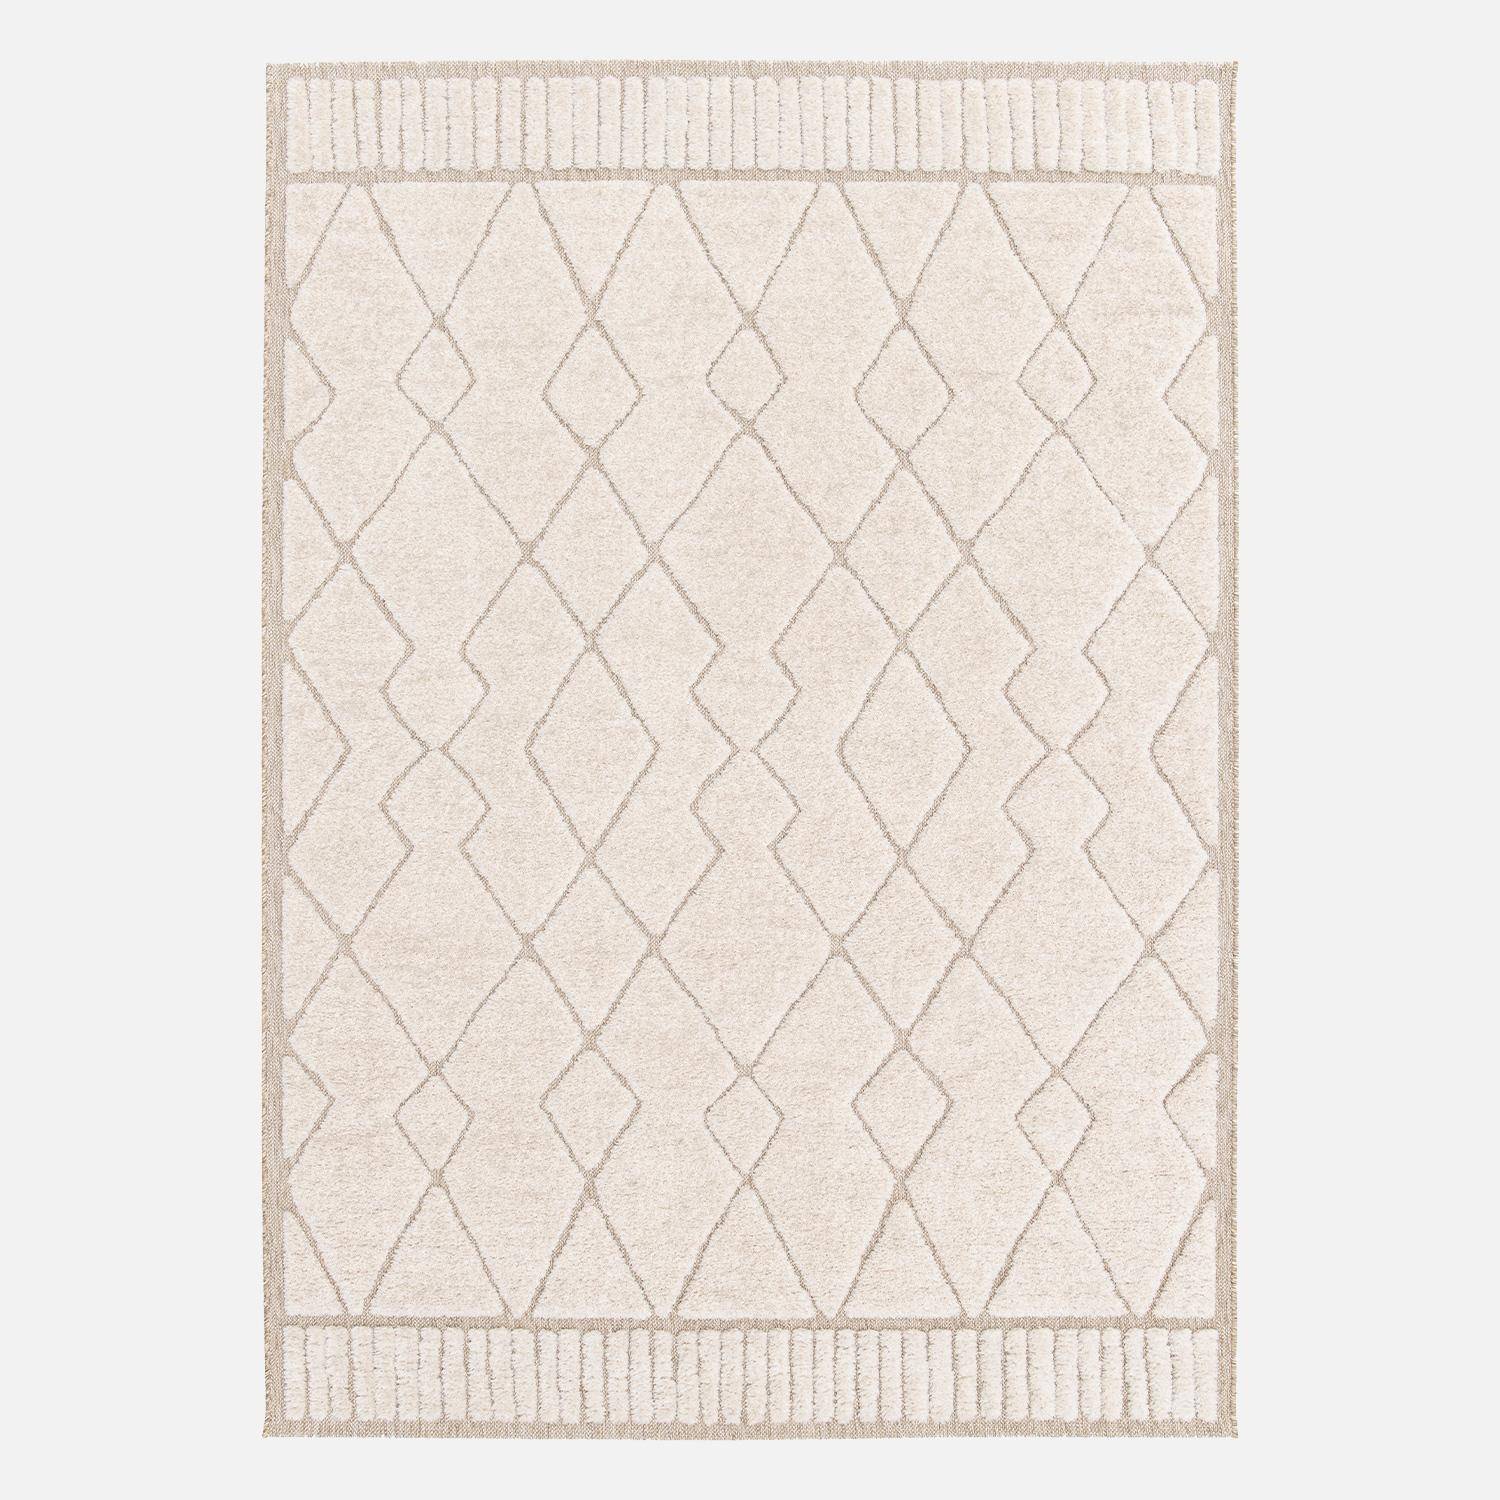 Interior carpet with Berber pattern, beige and cream, Judy, 160 x 230 cm,sweeek,Photo1